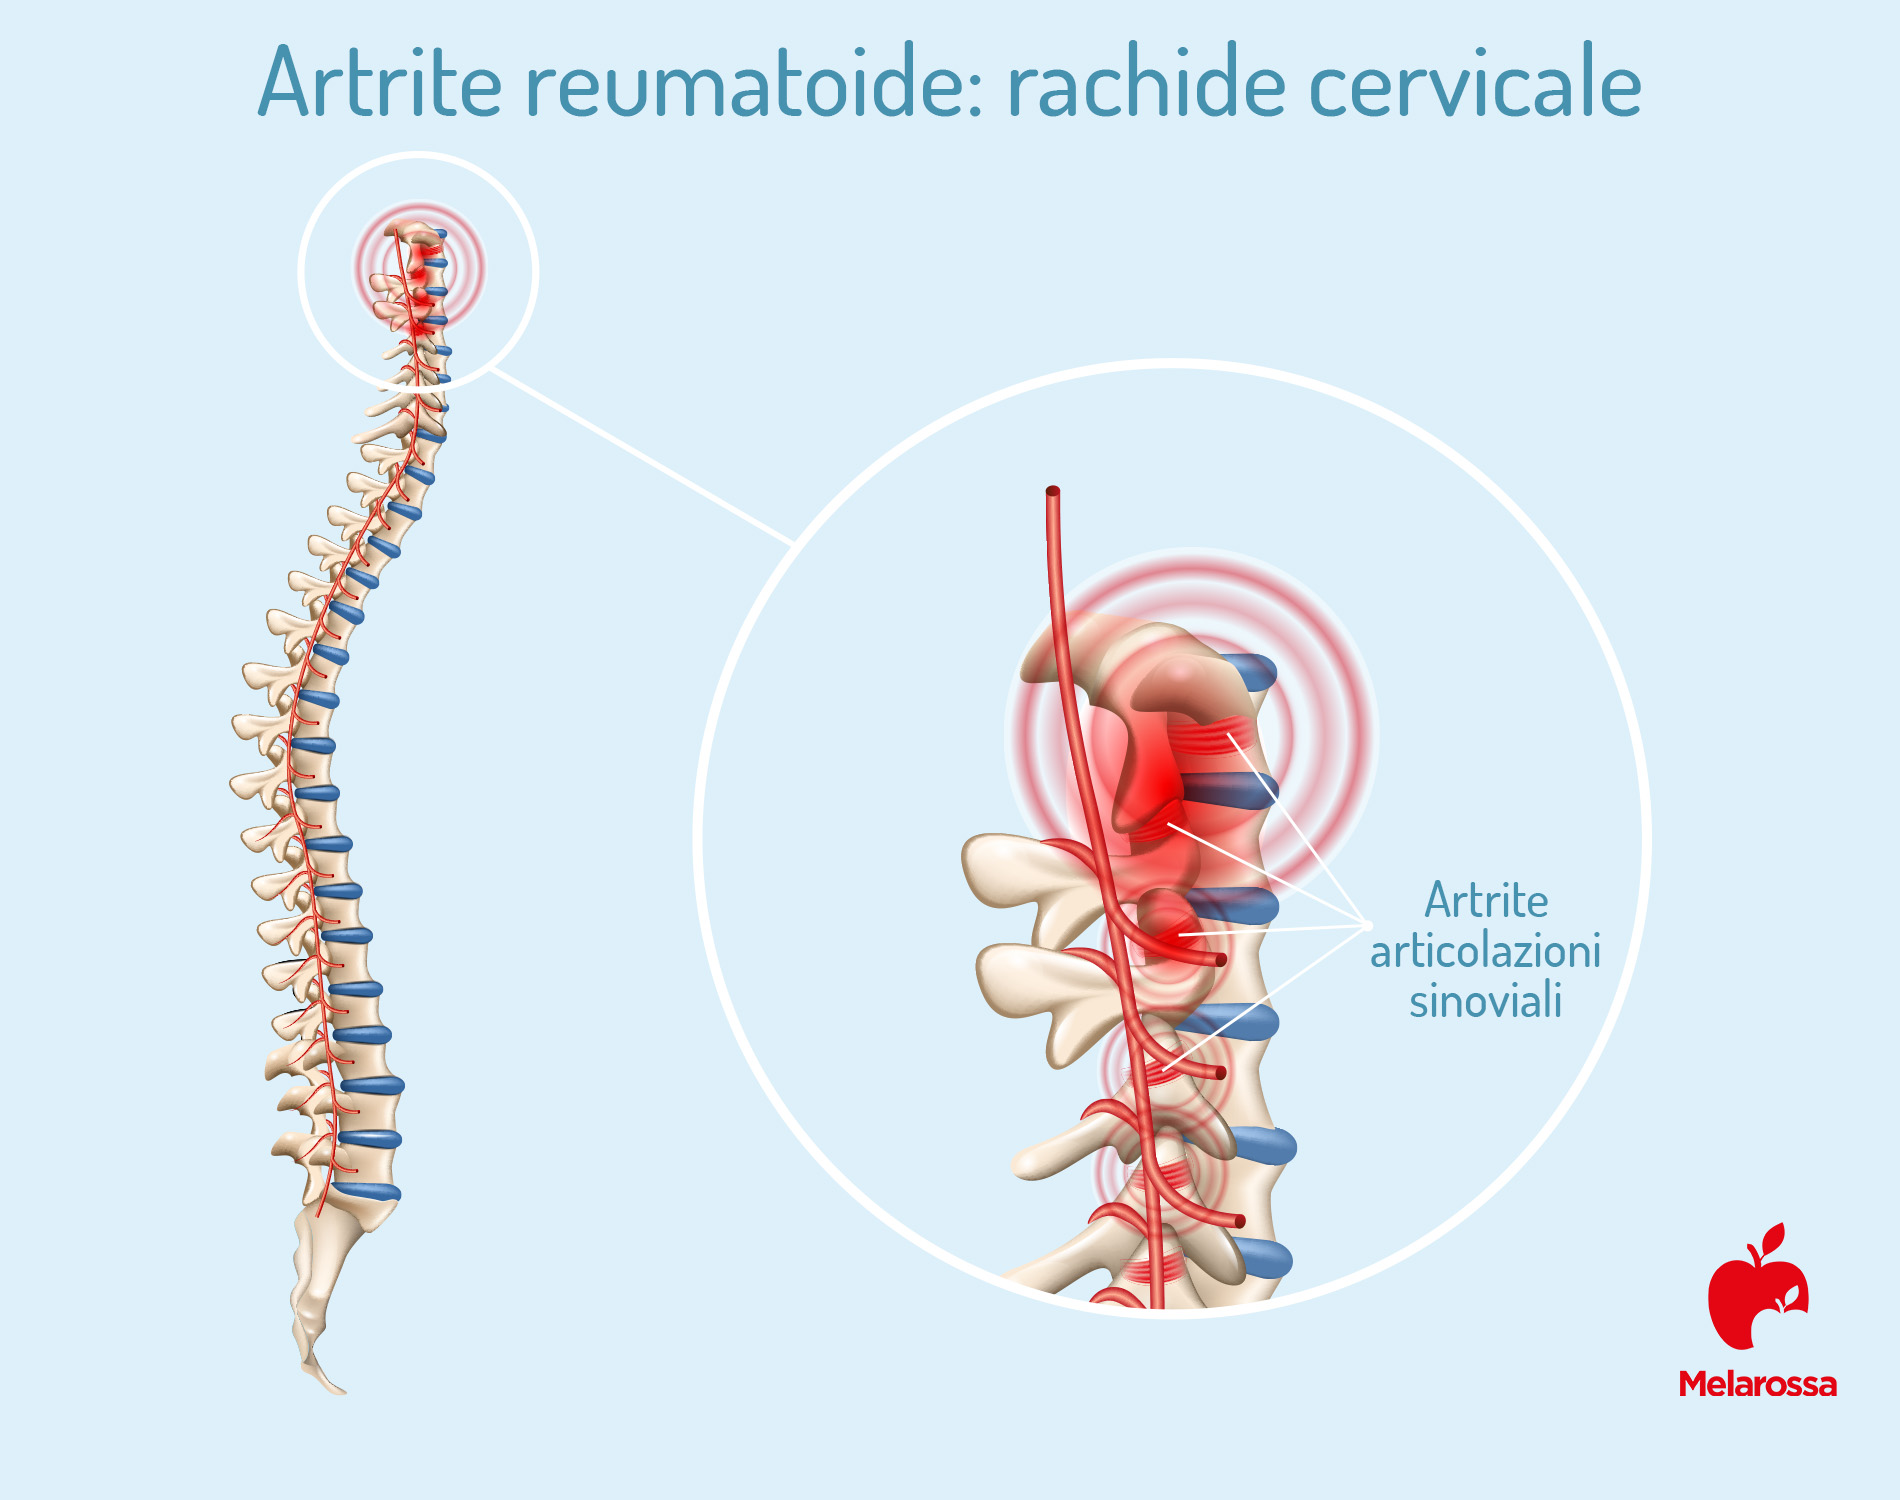 Artrite reumatoide: rachide cervicale 